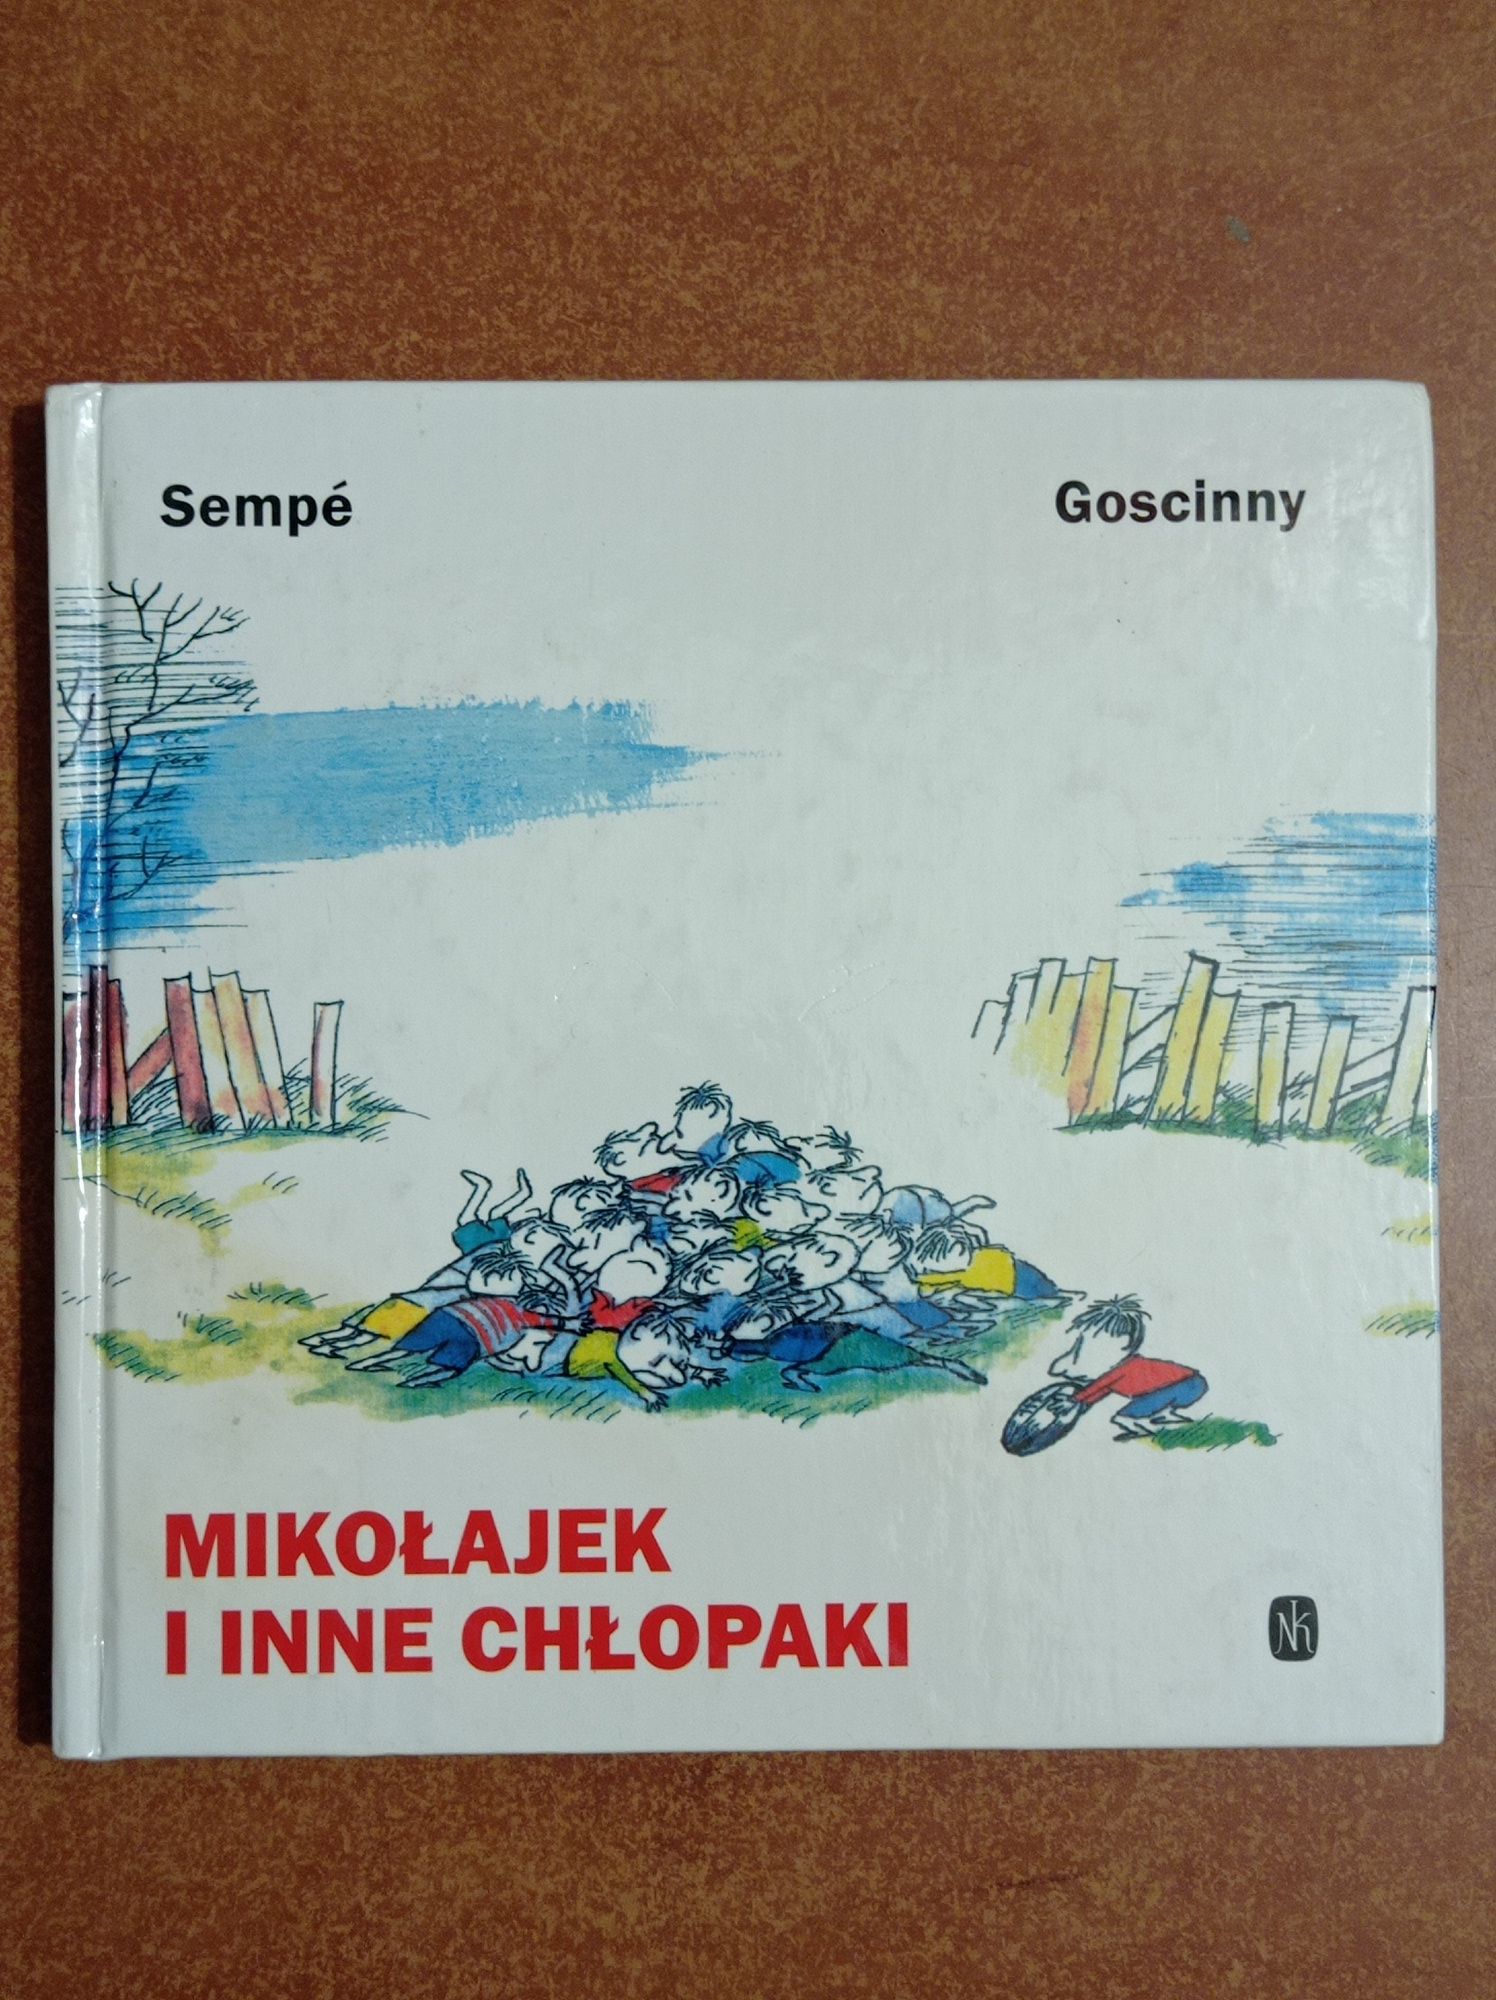 6 książek Muminki Mikołajek Katarzynka